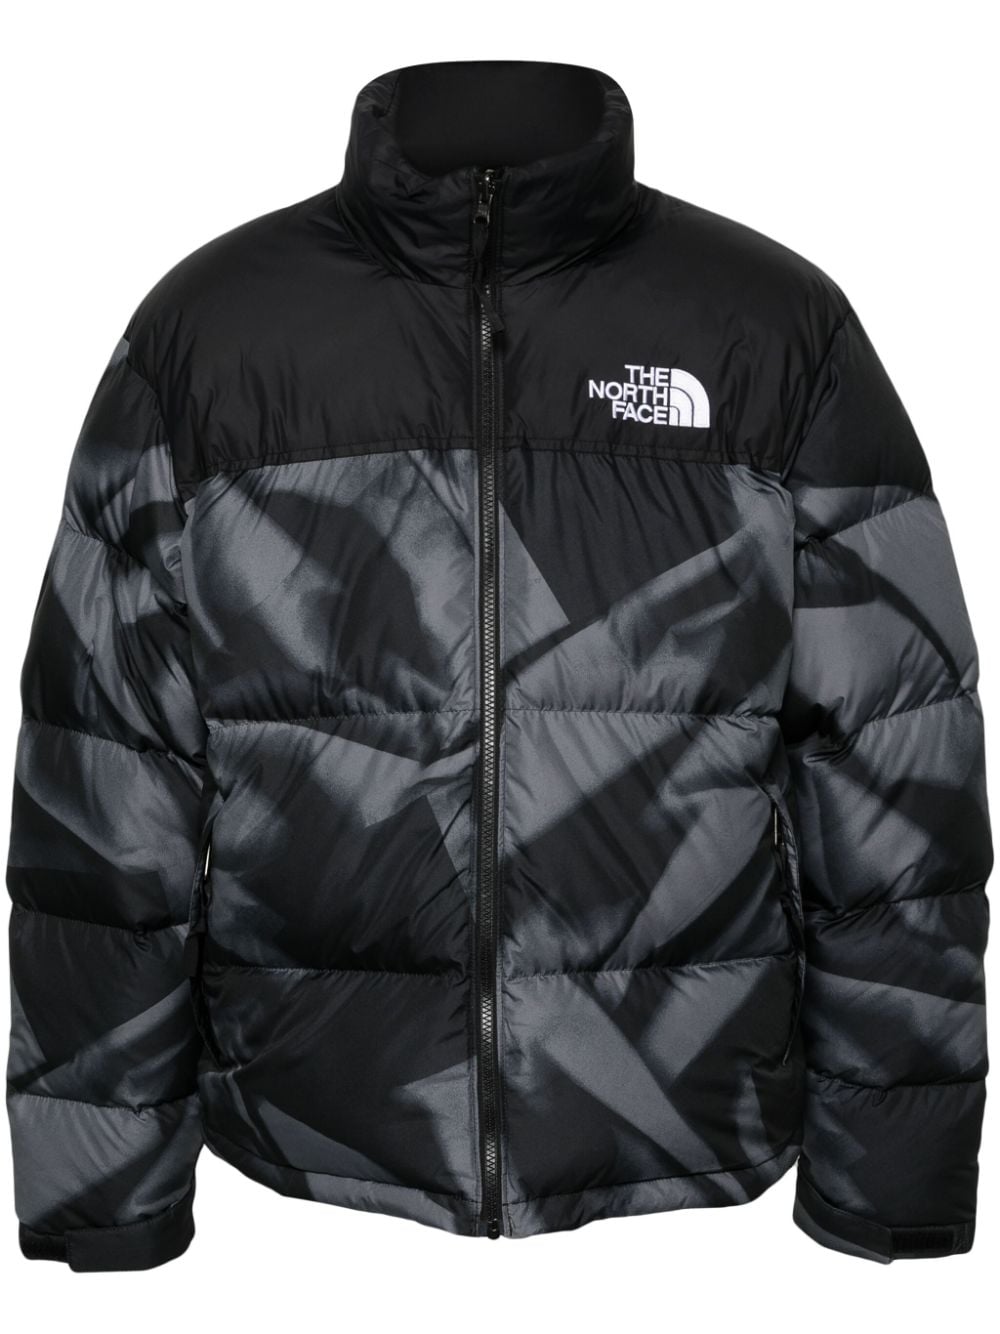 The North Face 1996 Retro Nuptse down jacket - Black von The North Face